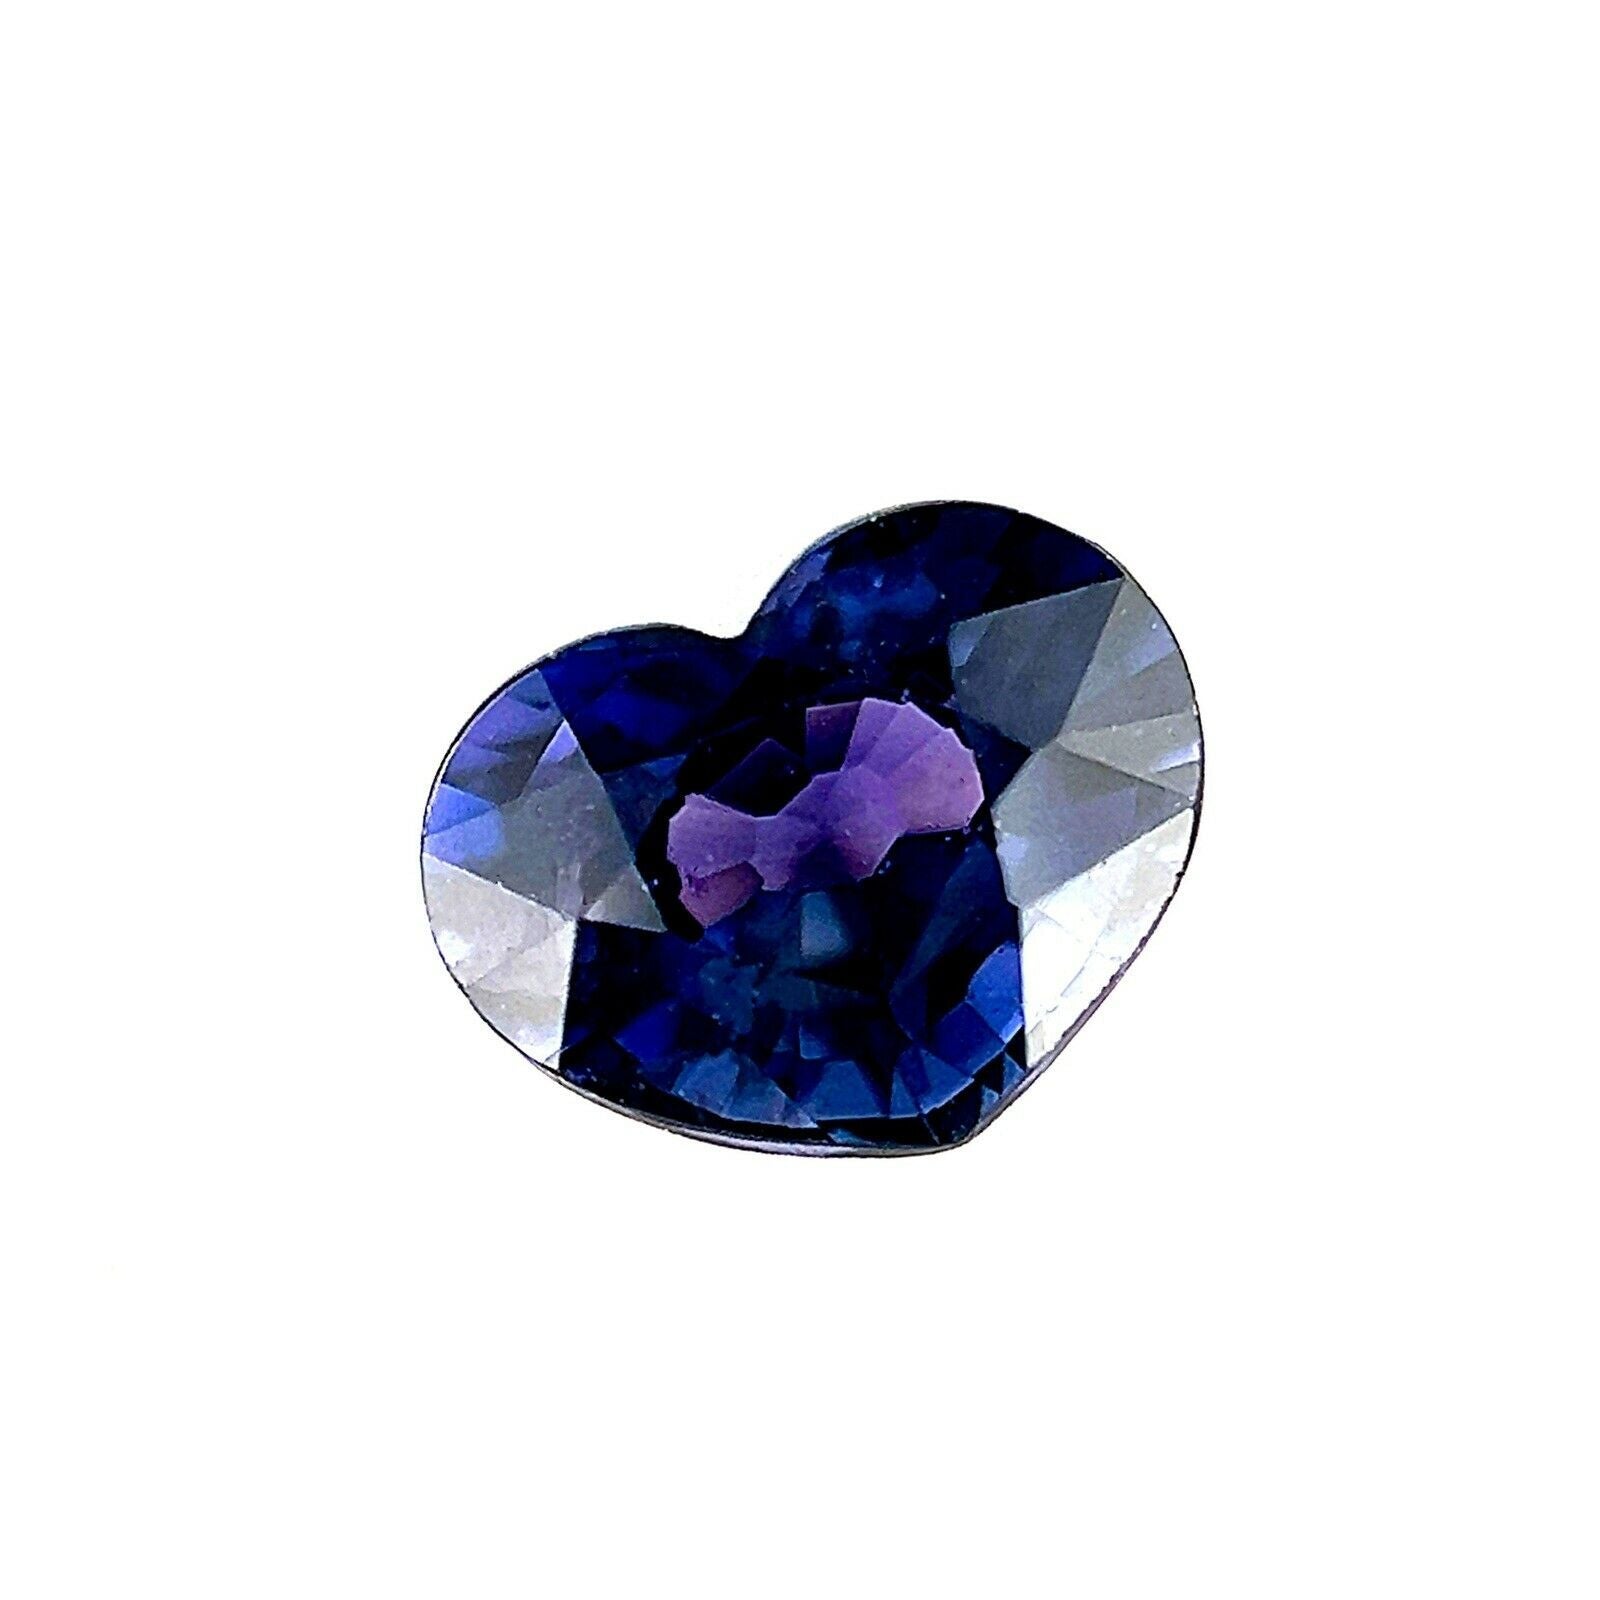 1.18ct Fine Deep Purple Sapphire Heart Cut Rare Loose Cut Gem For Sale